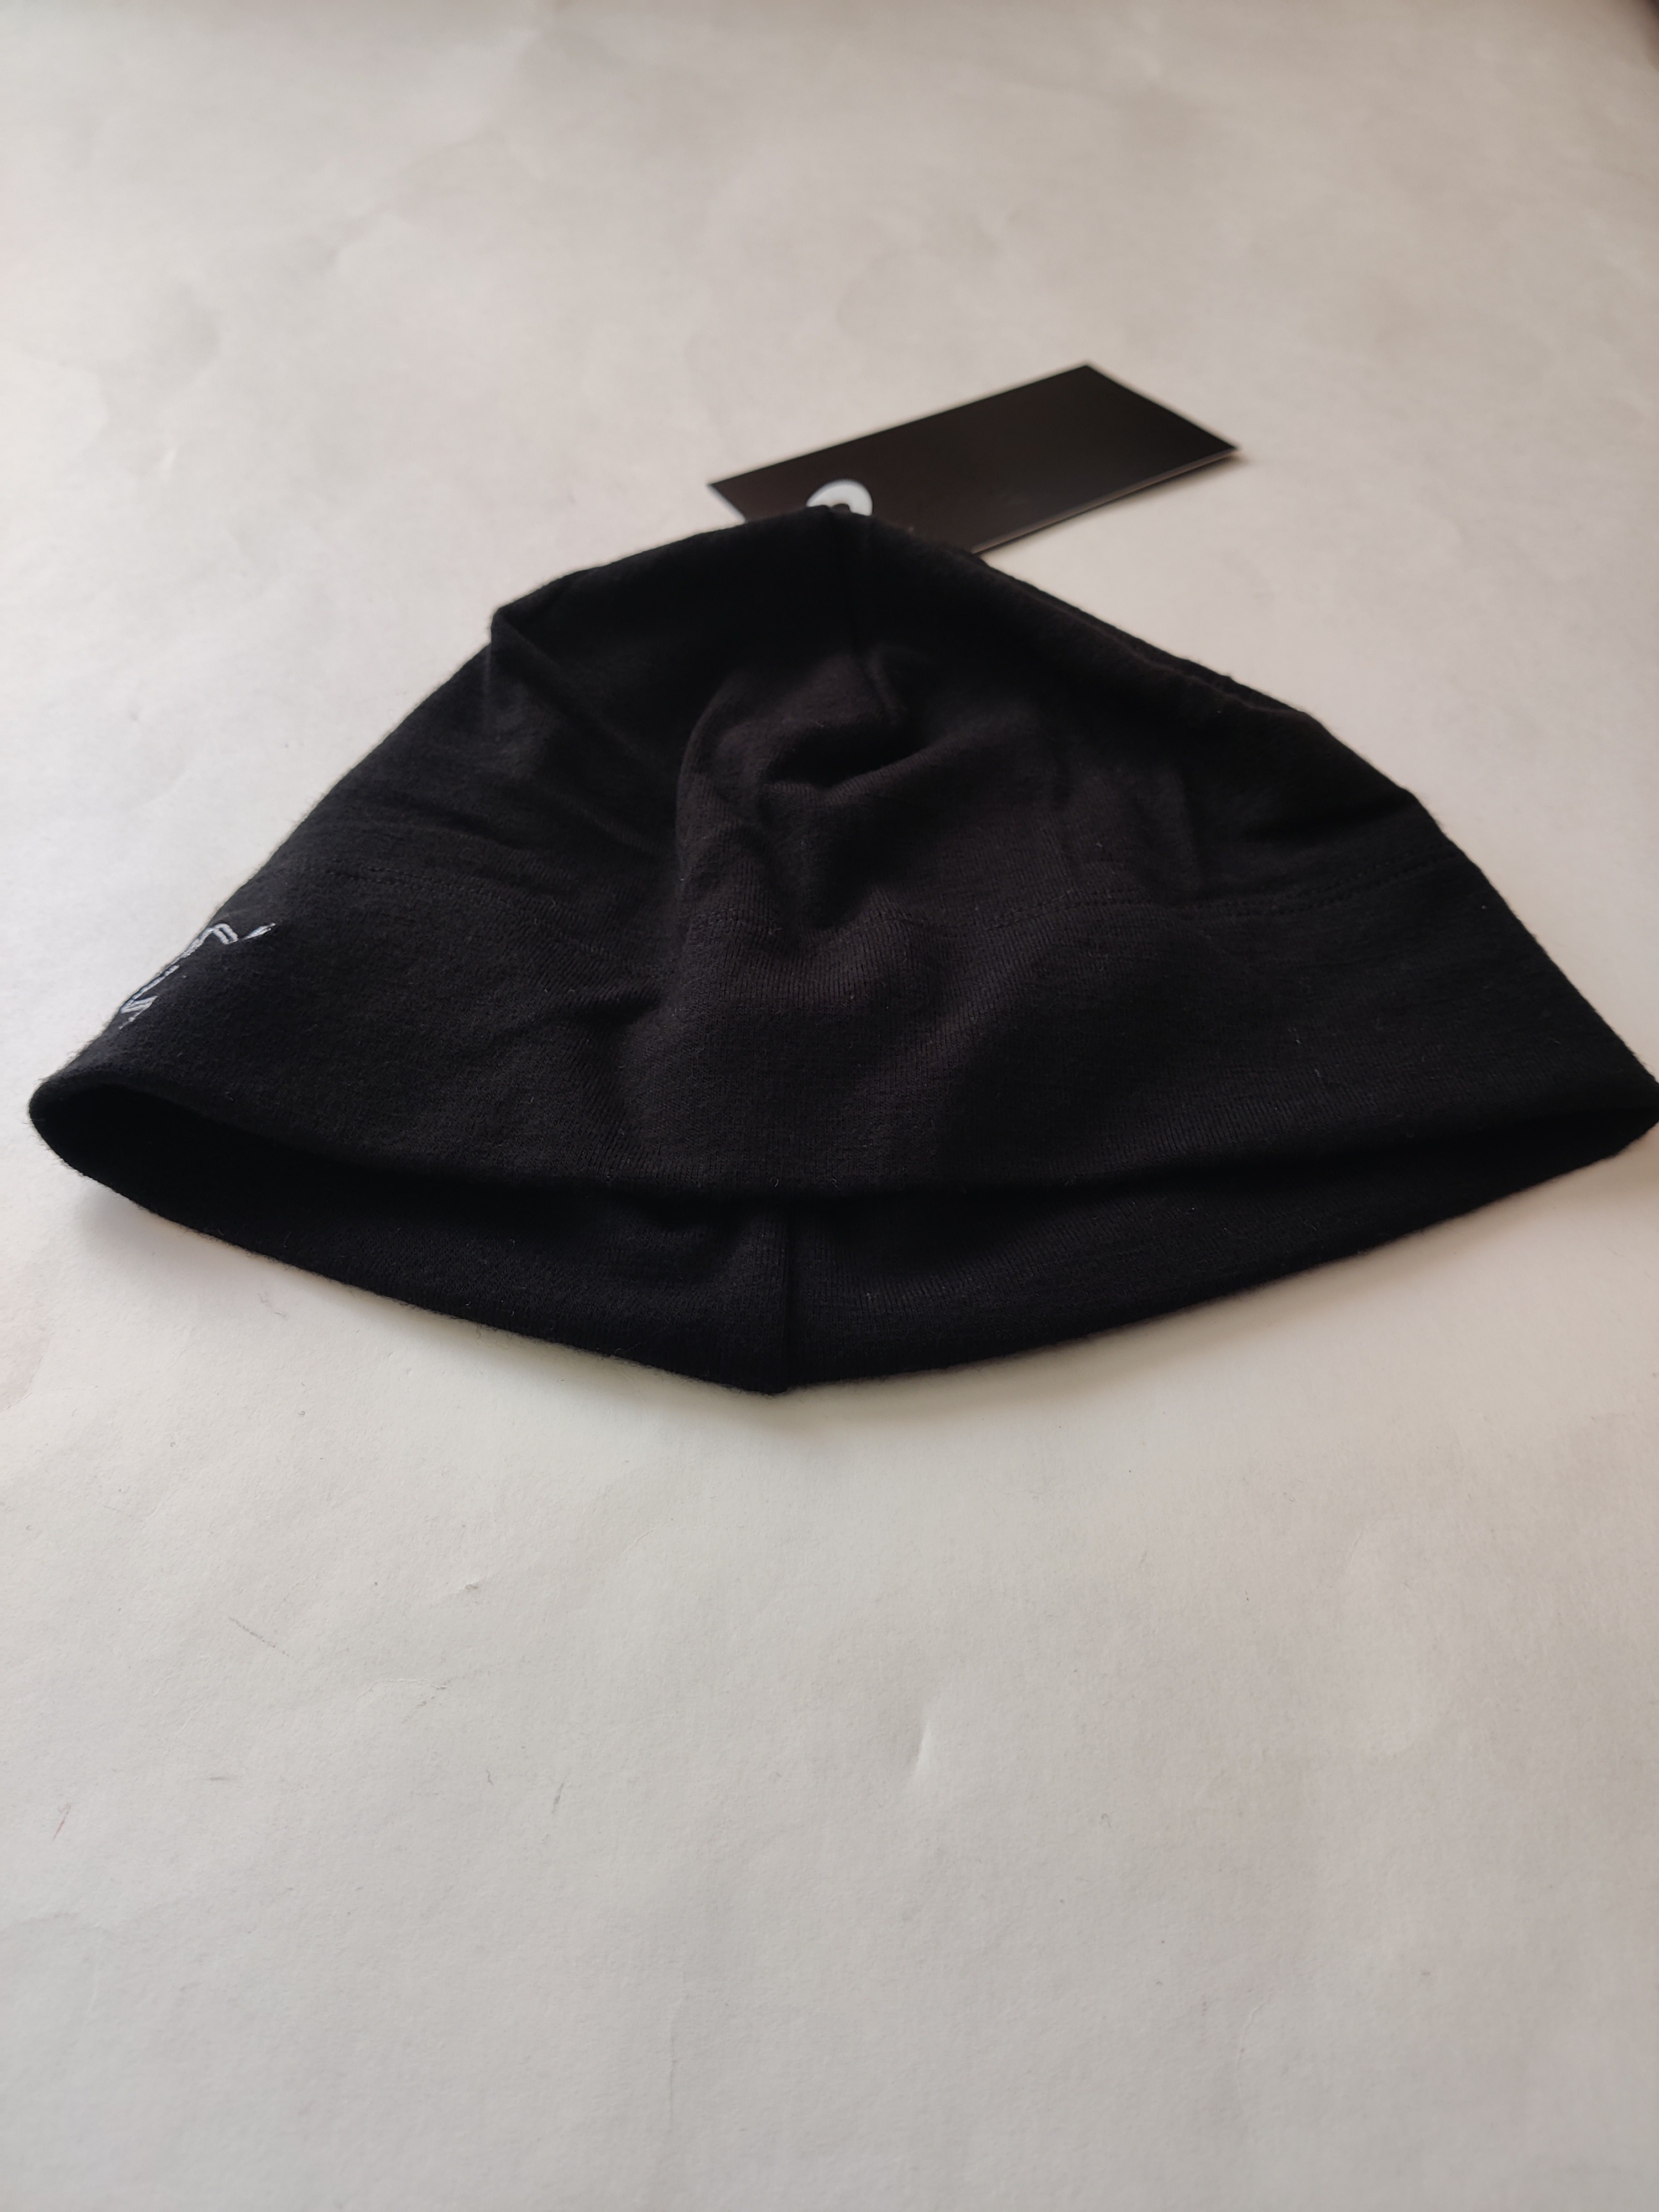 Rho LTW Merino Wool Beanie Thin Hat Winter Black Travel Outdoor Cap - 6